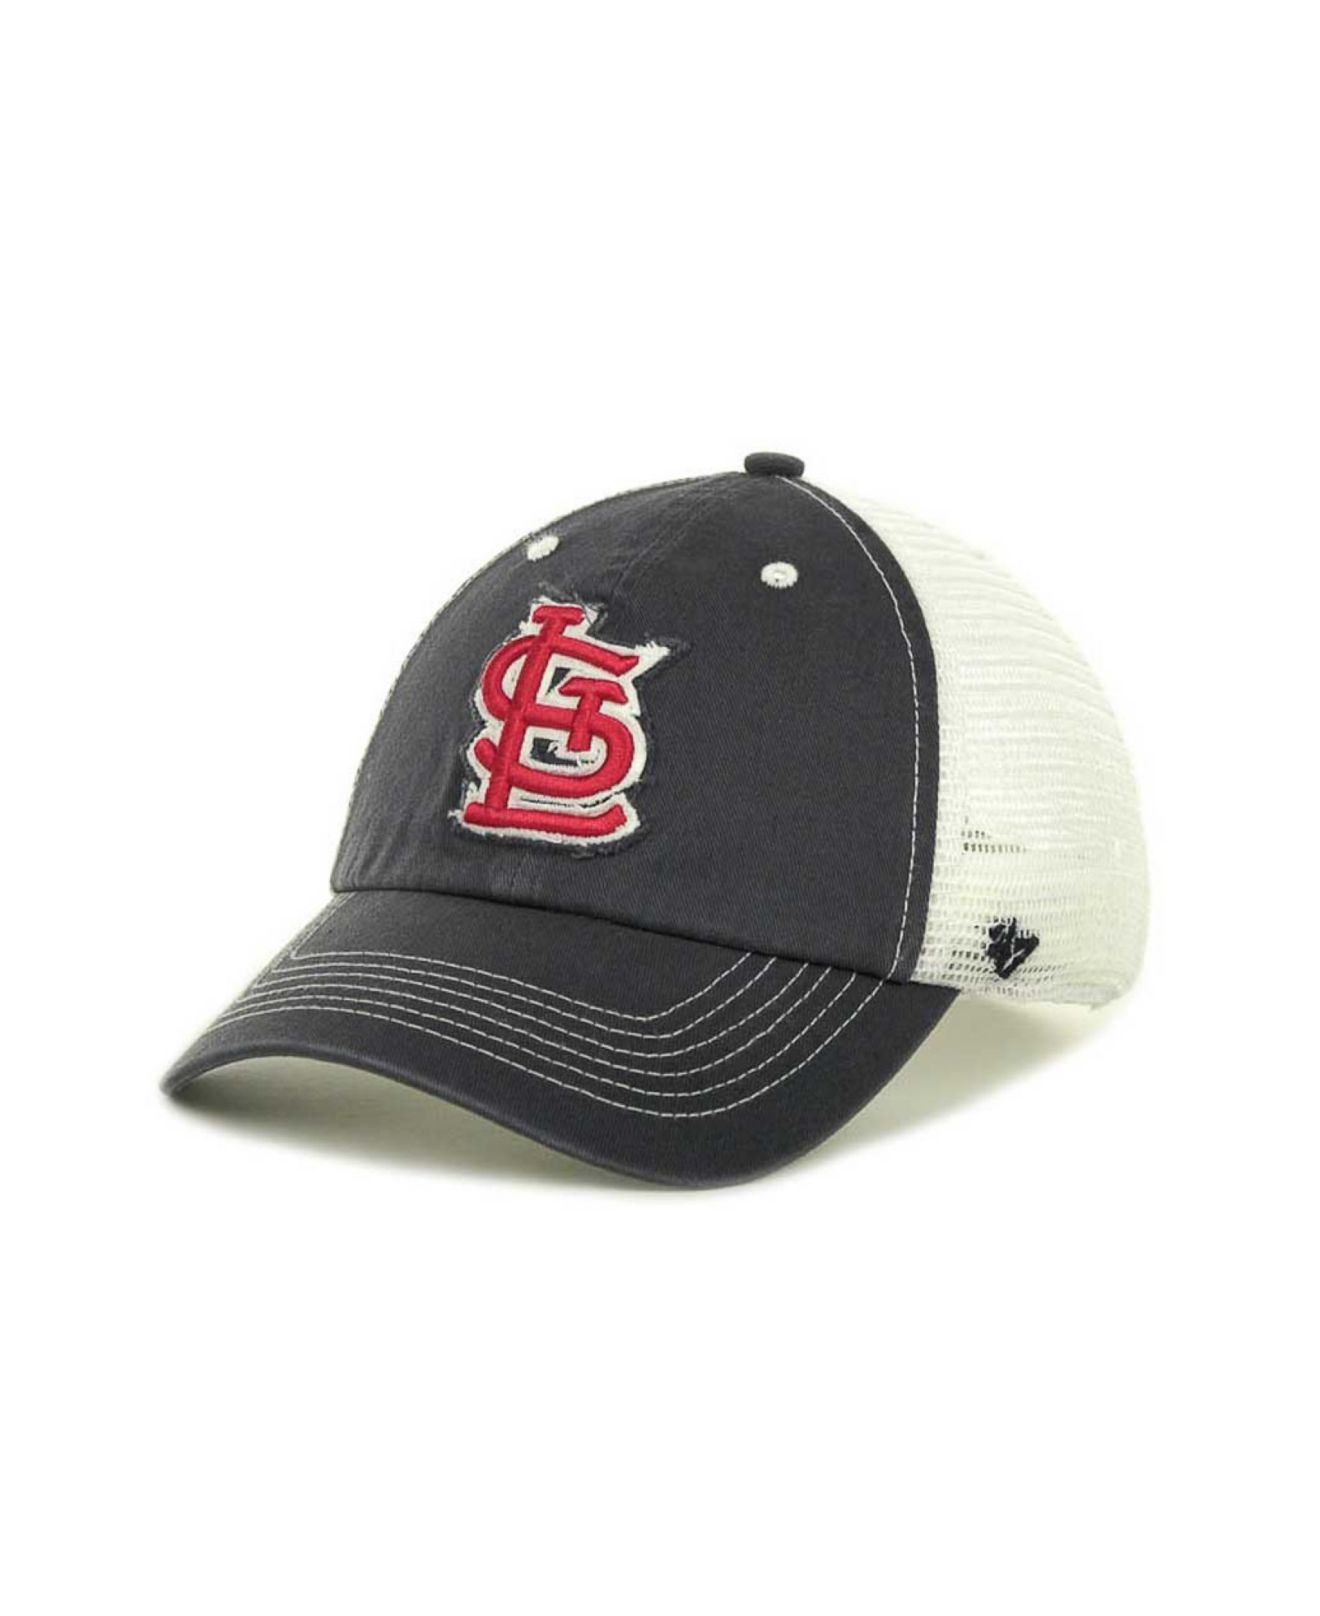 St. Louis Cardinals Mens Hat, Majestic Cardinals Hats, Baseball Caps,  Snapbacks